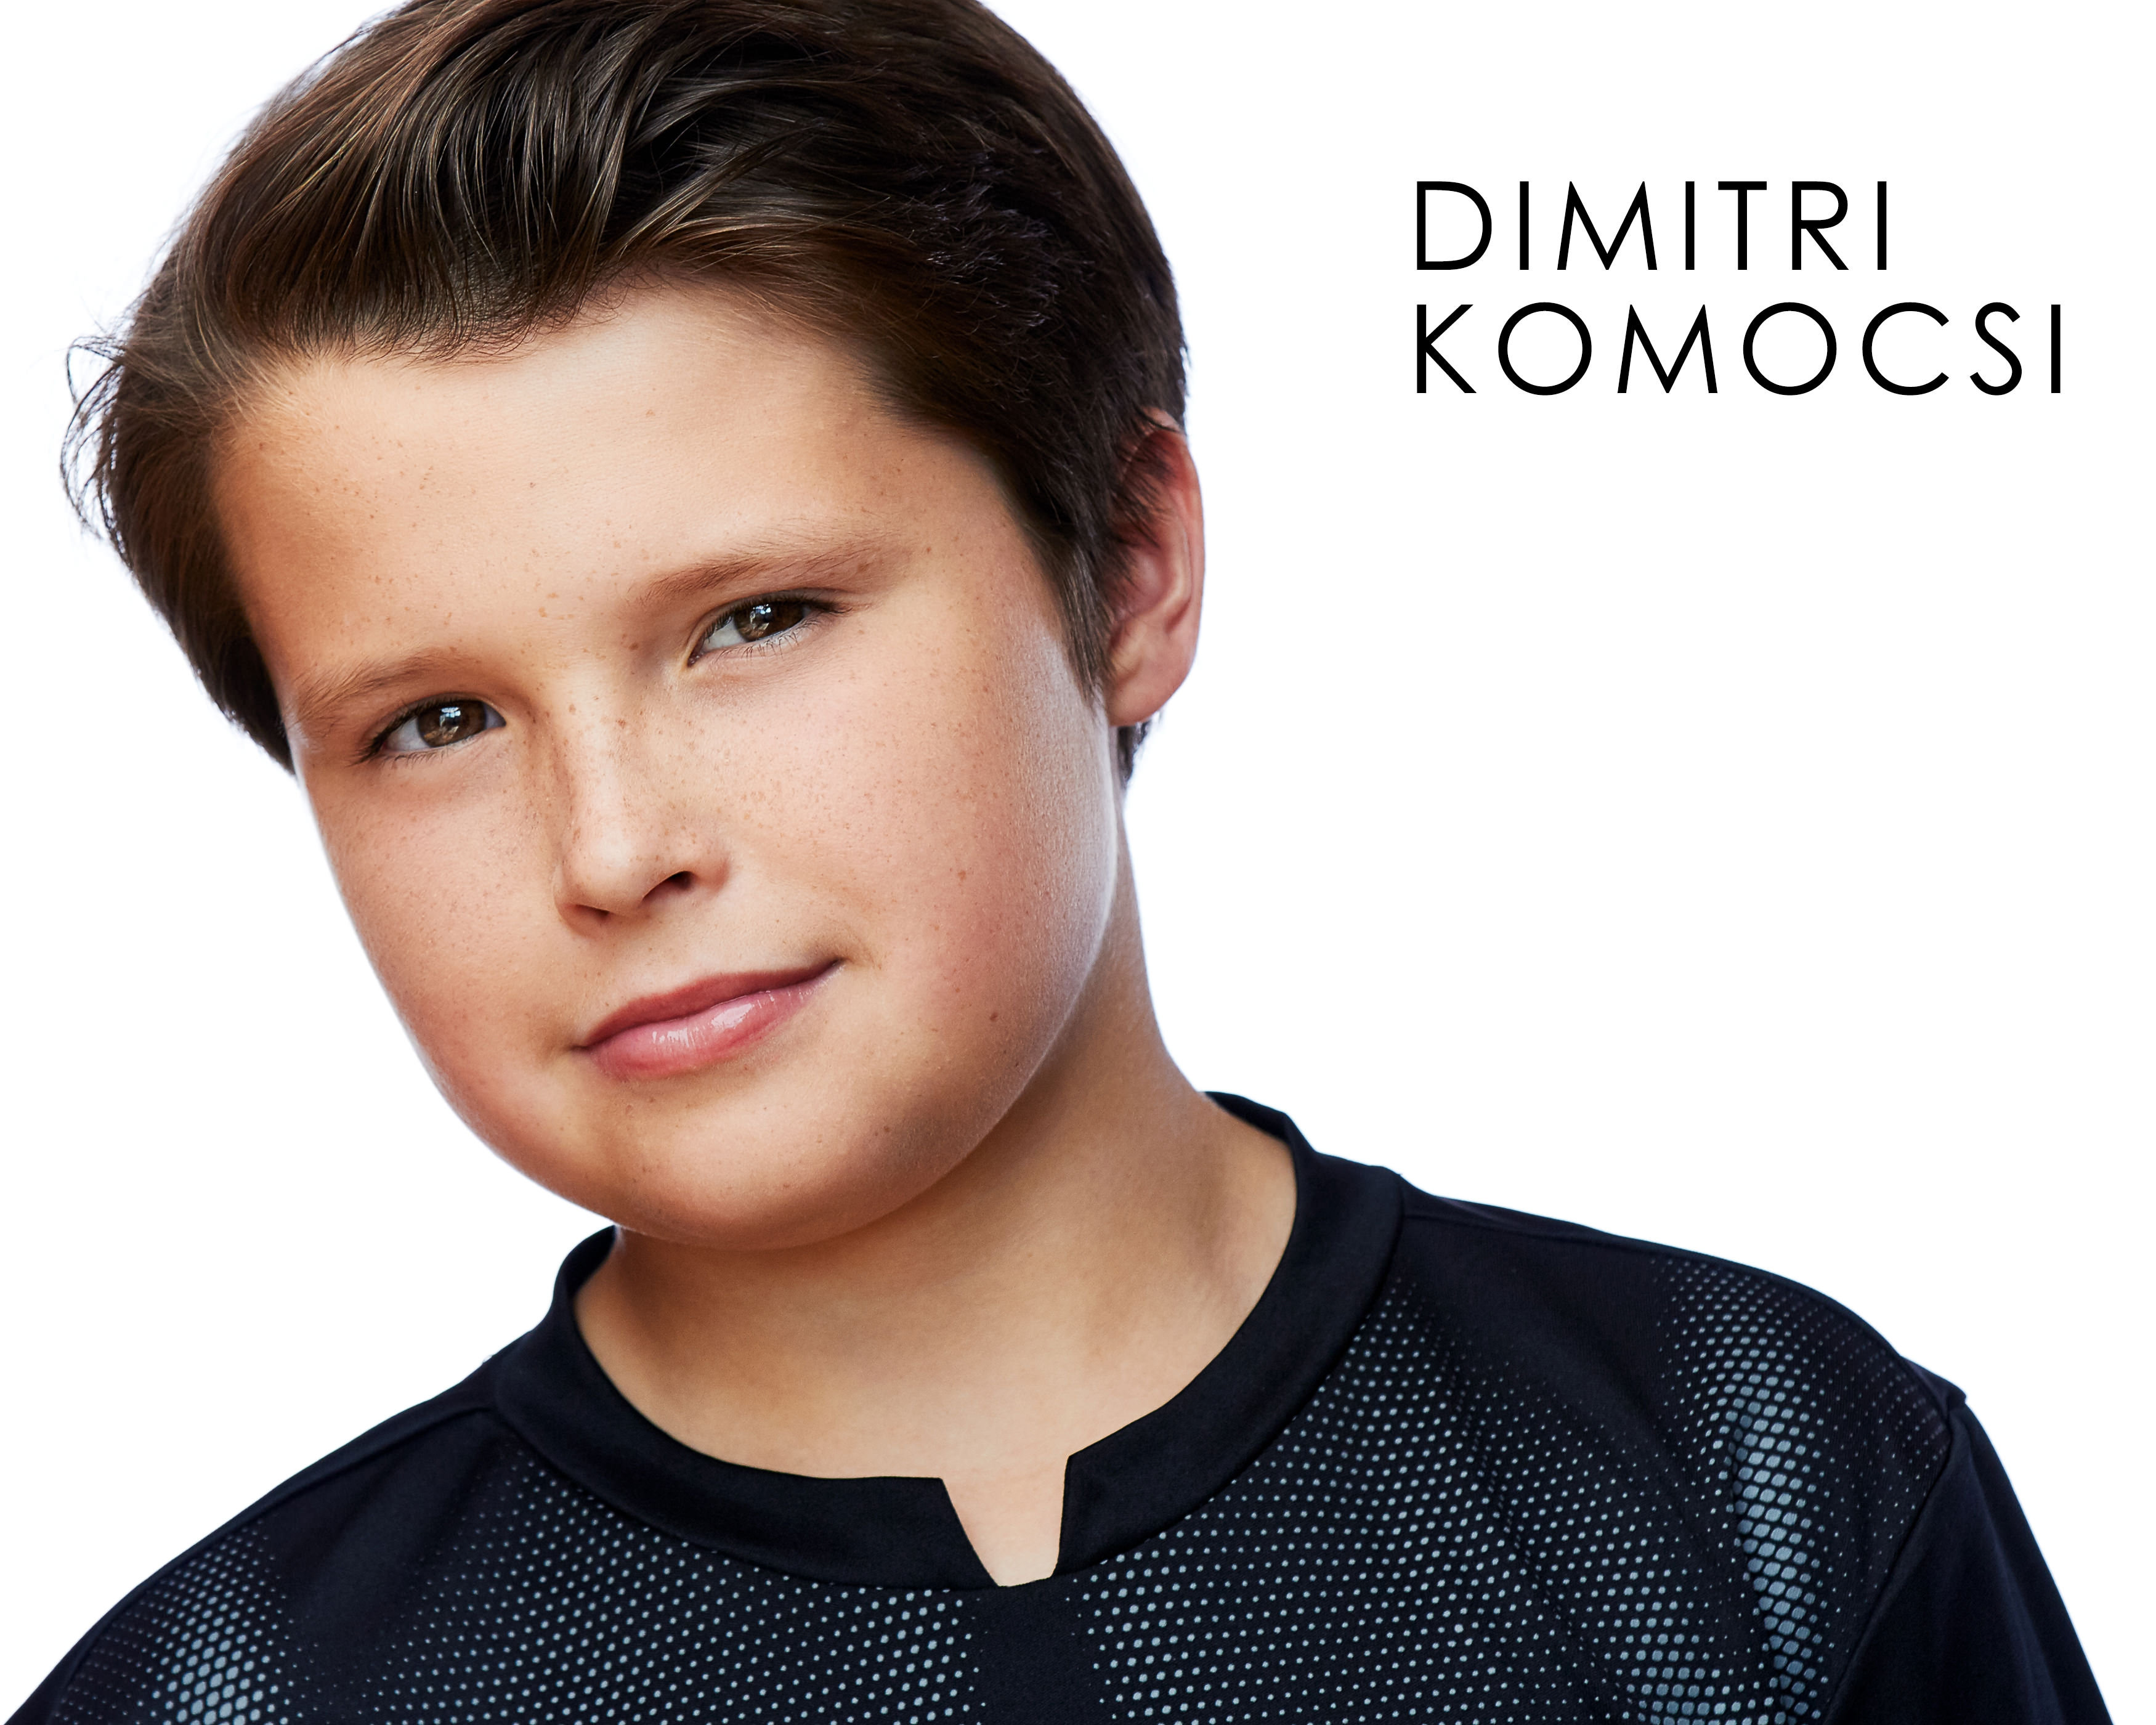 Dimitri Komocsi Actor